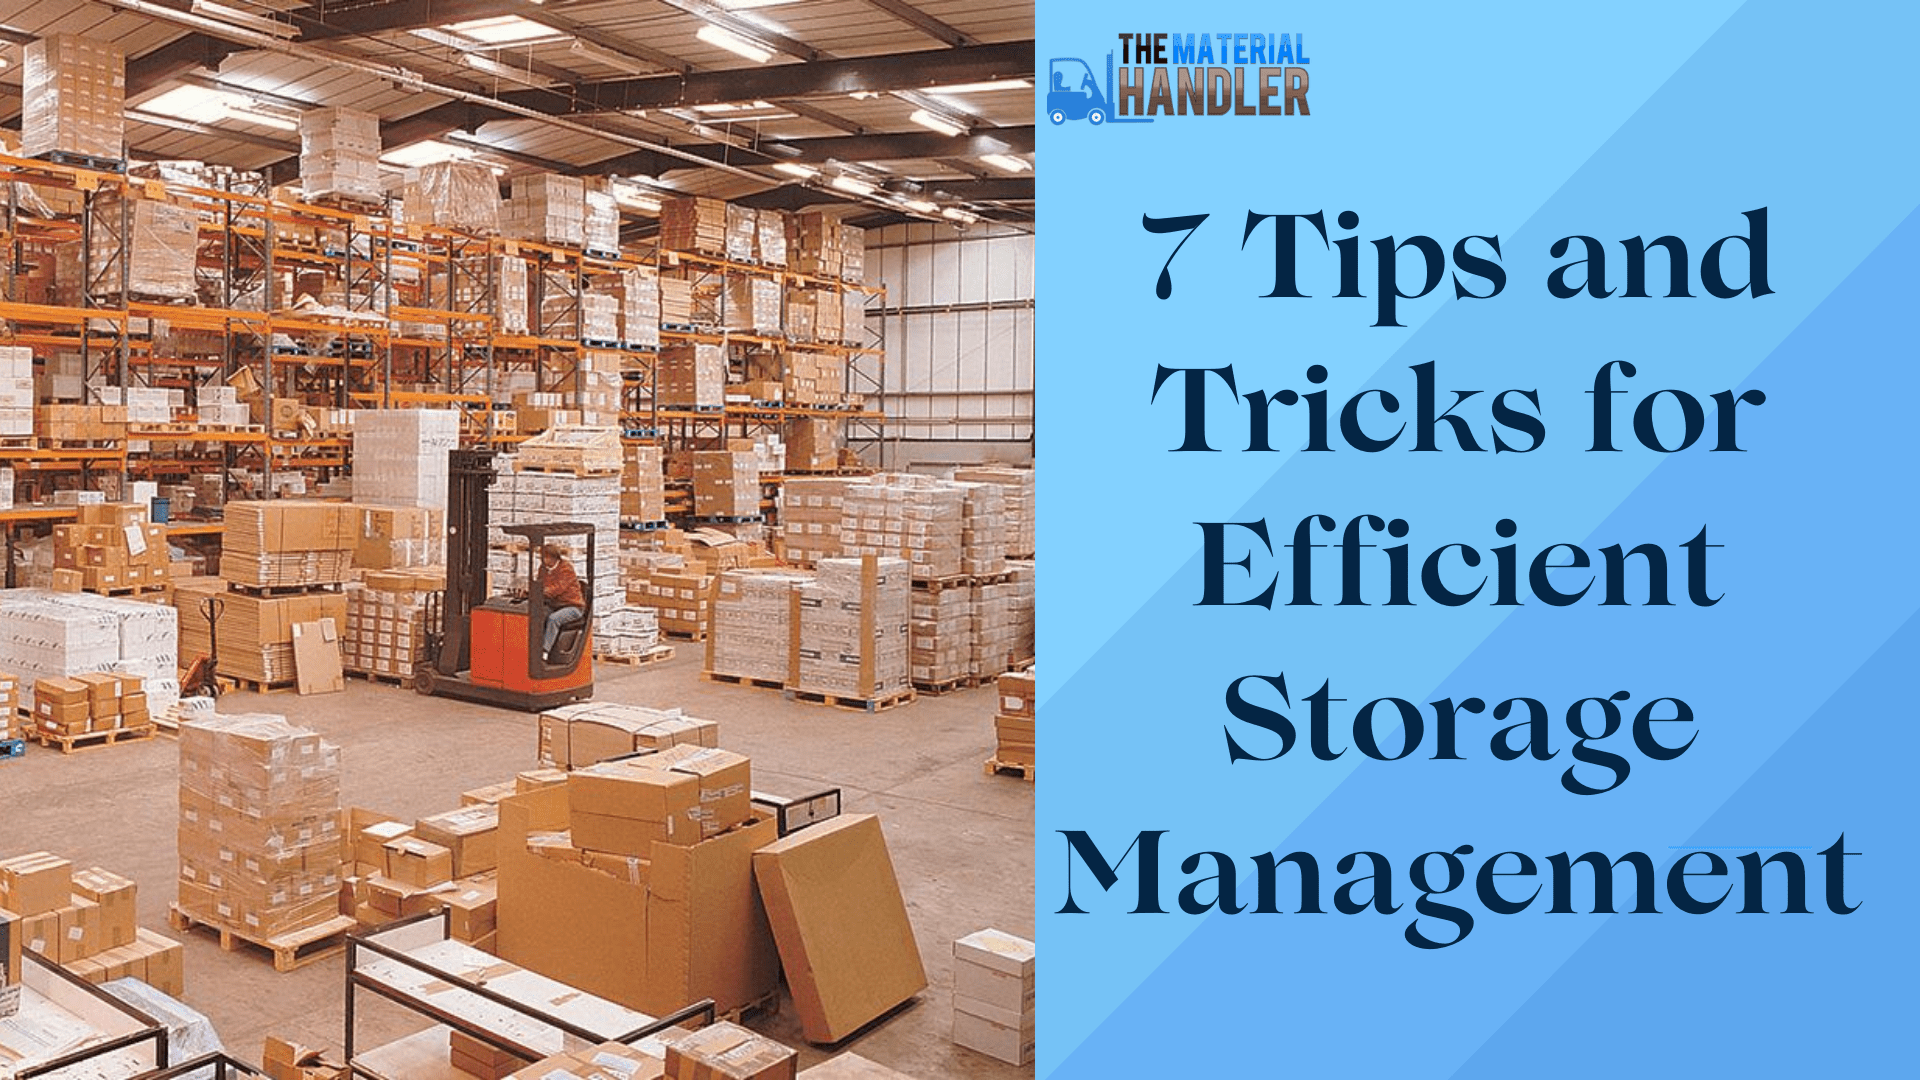 Warehouse Storage Management tips